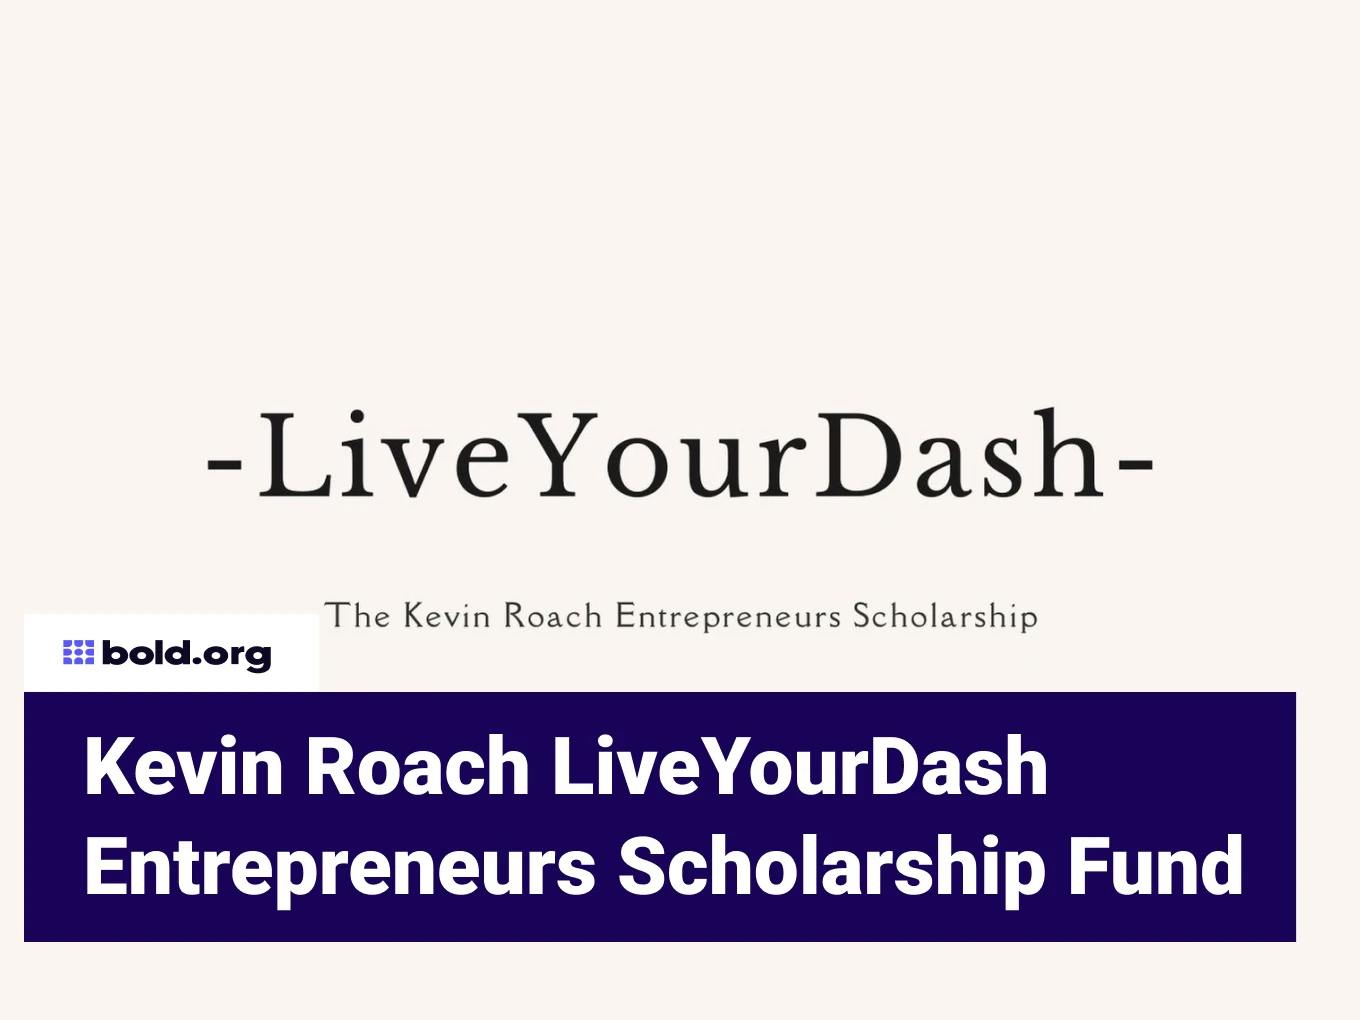 Kevin Roach LiveYourDash Entrepreneurs Scholarship Fund